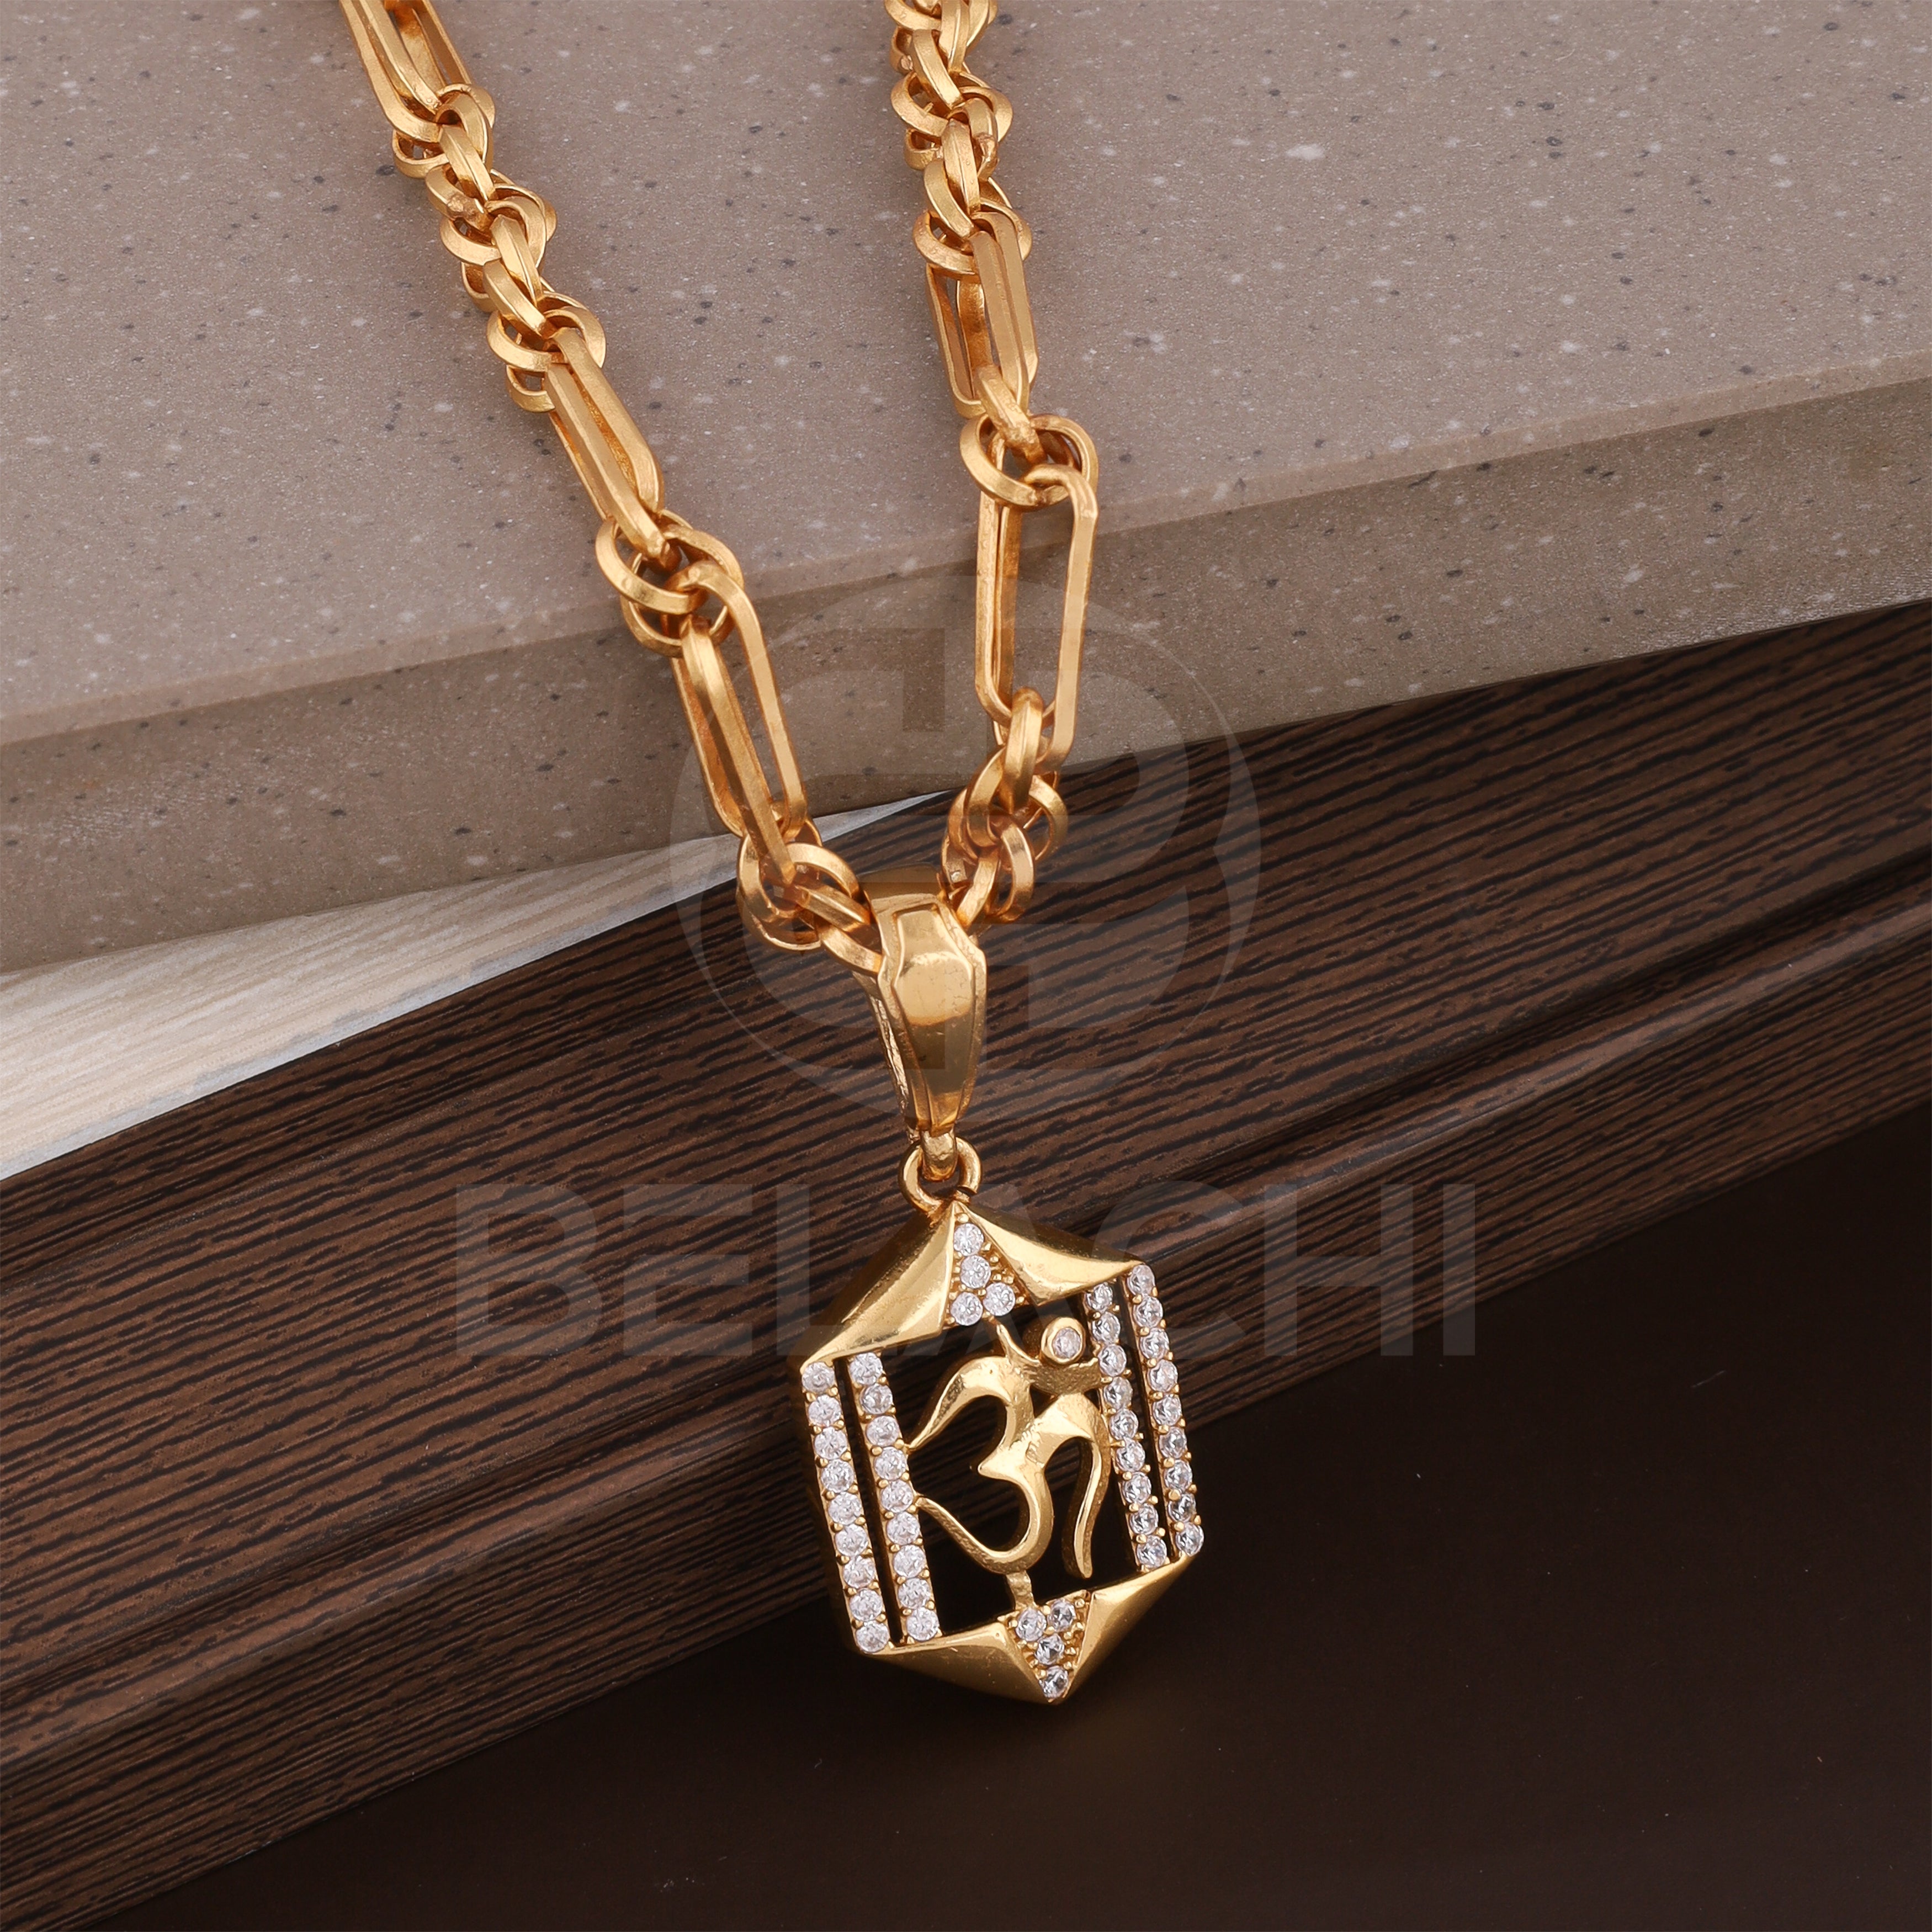 14K Yellow Gold Diamond Cut Rope Chain Necklace 1.5mm - 5mm, Men Women 16